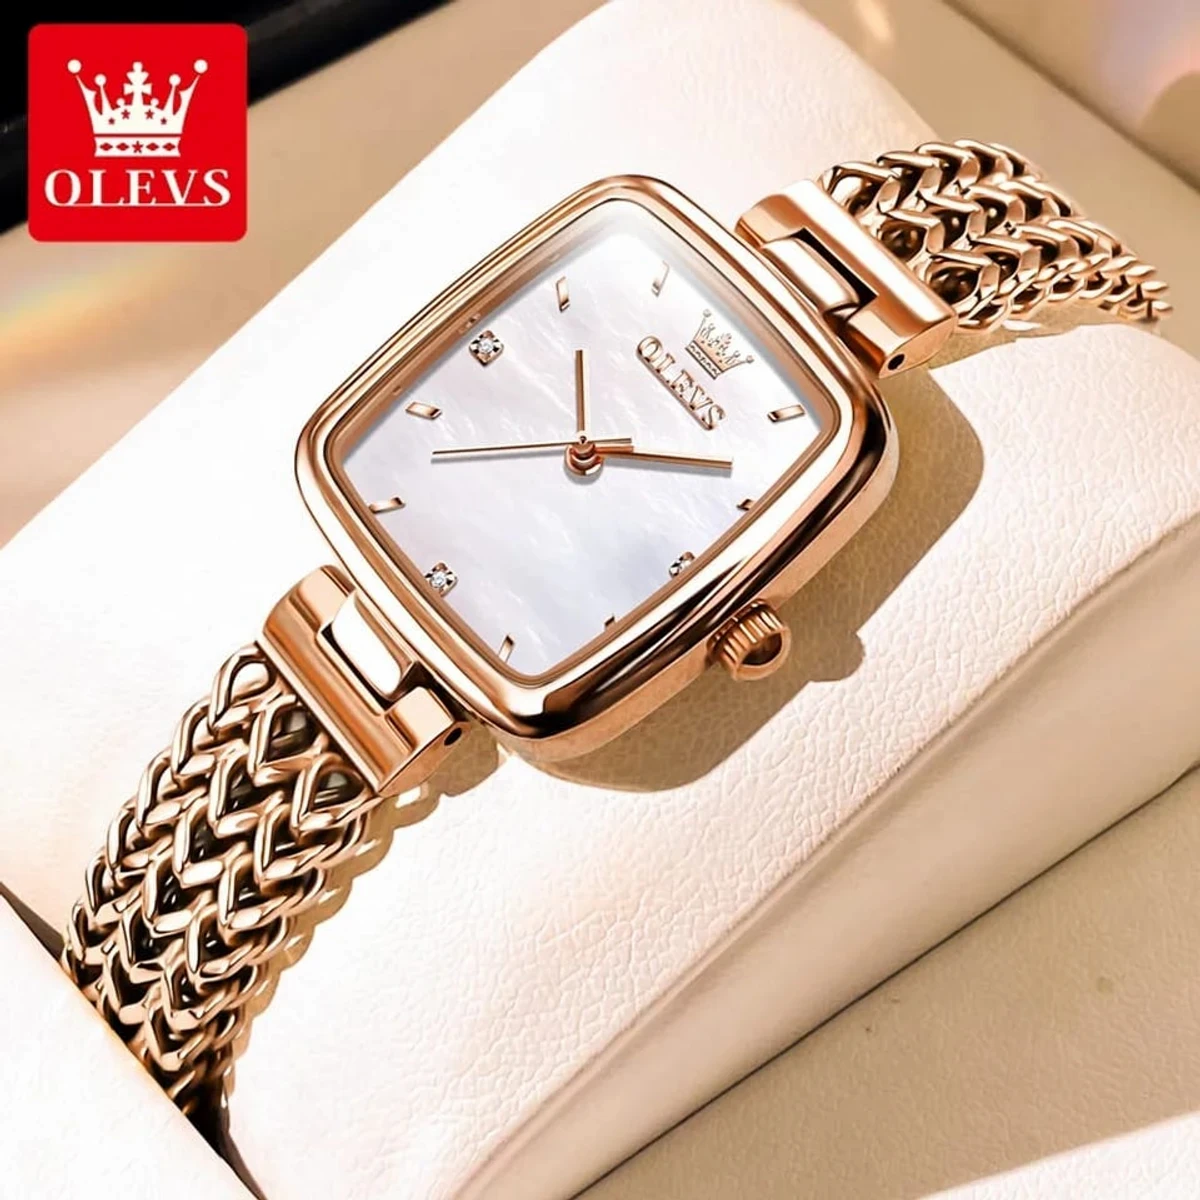 OLEVS WOMEN WATCH MODEL 9951 Square Fashion Ultra-Thin Quartz Watch - COOLER GOLDEN CHAI DIAL WHITE